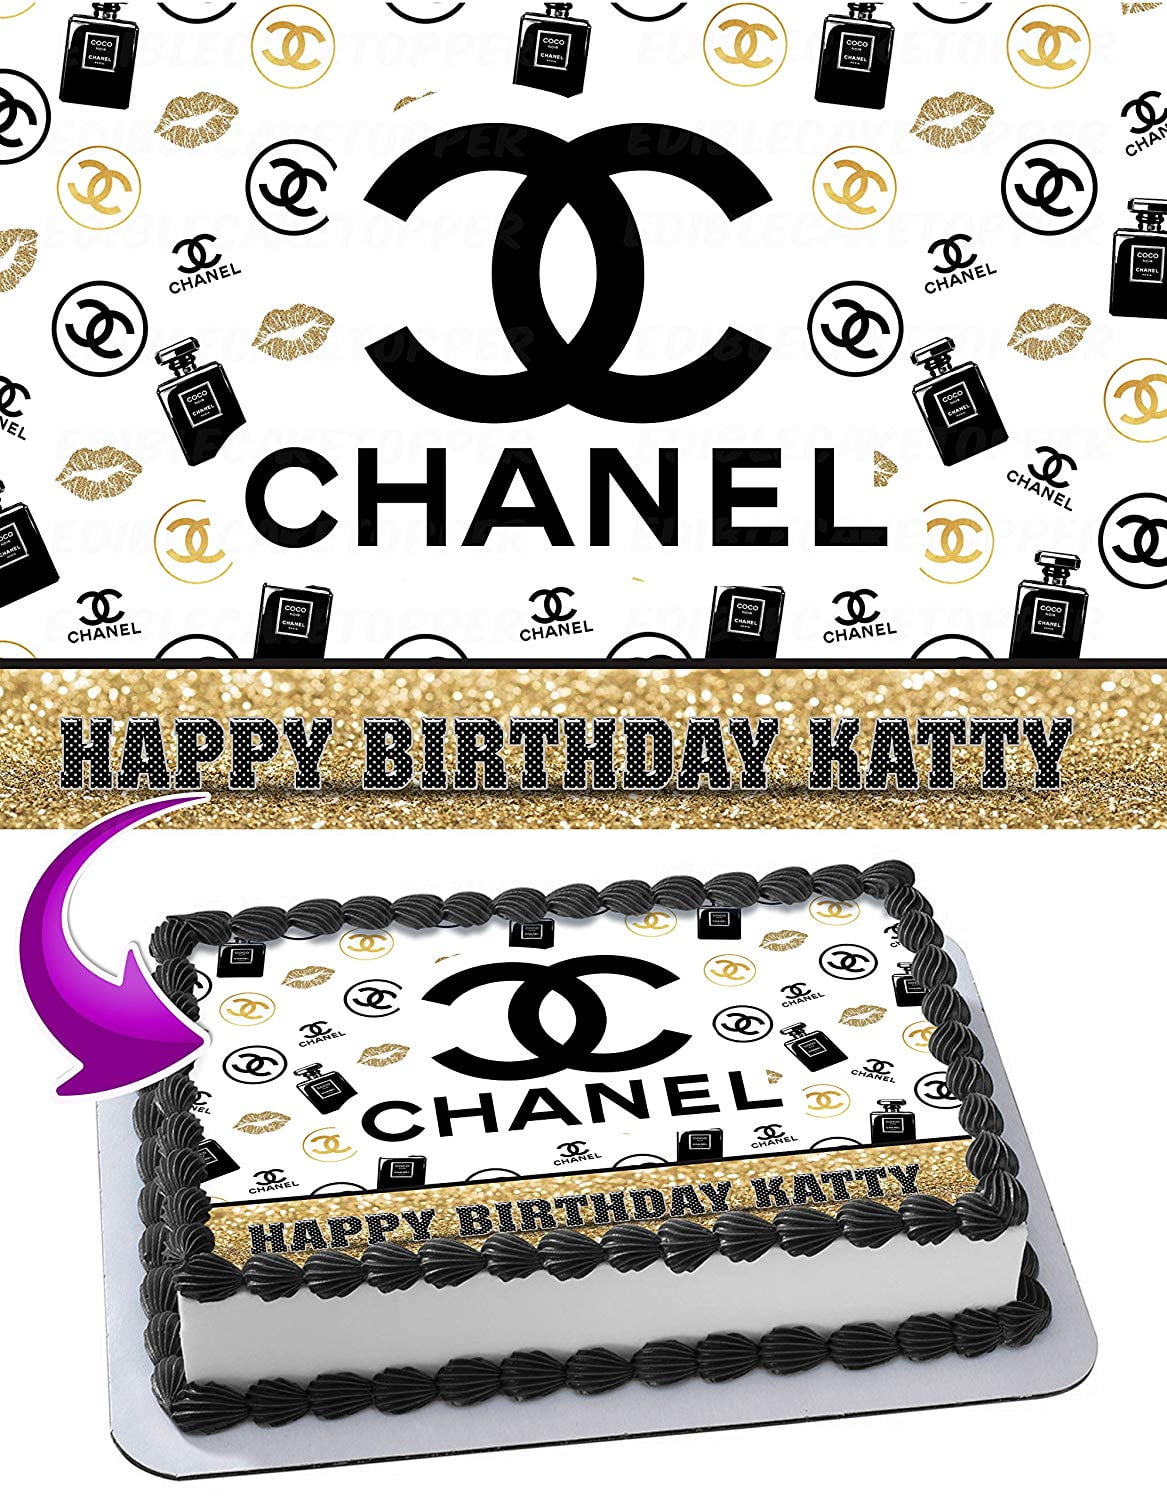 Chanel - Edible Cake Topper - 11.7 x 17.5 Inches 1/2 Sheet rectangular 